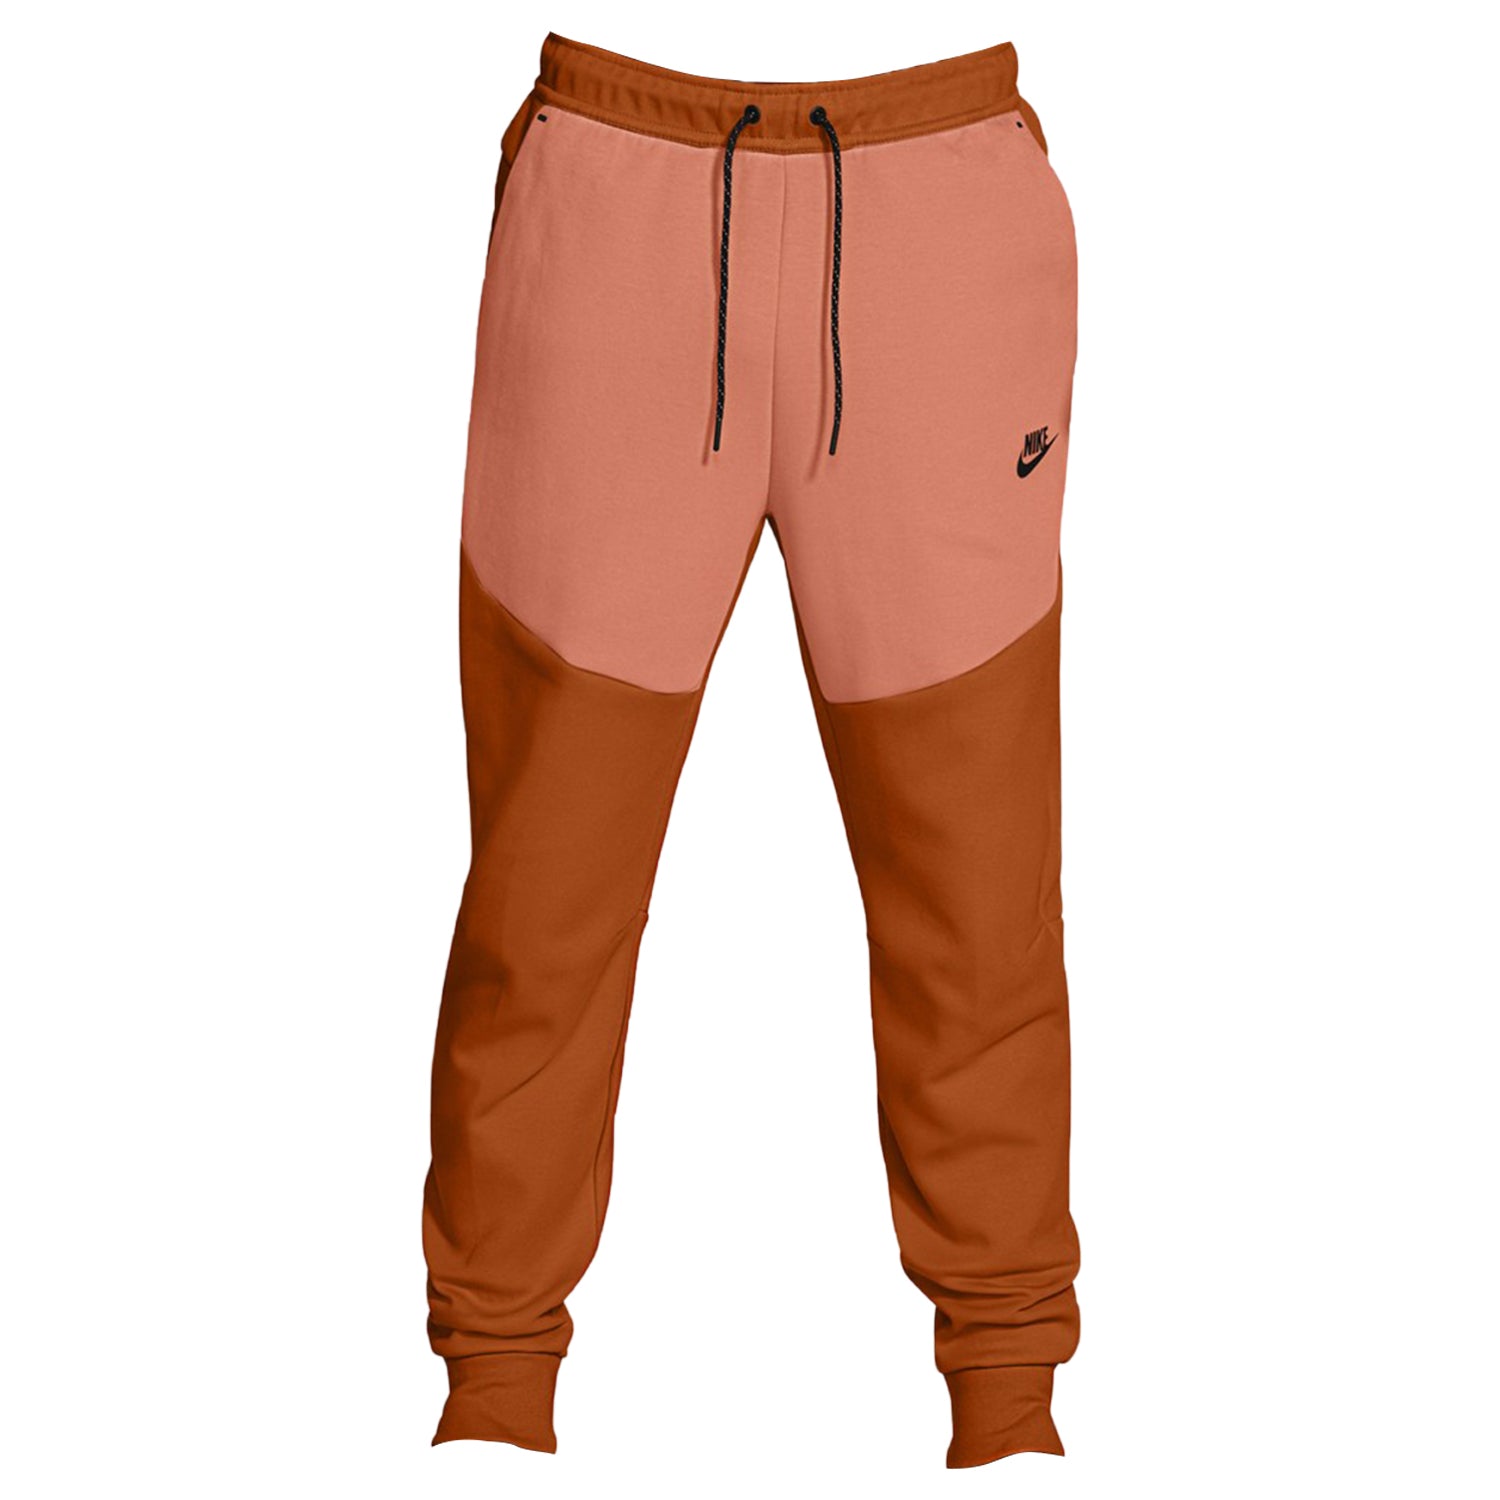 Orange Pants - Sportswear Sale Tent Black Nike Fleece Tech NY Campfire Jogger